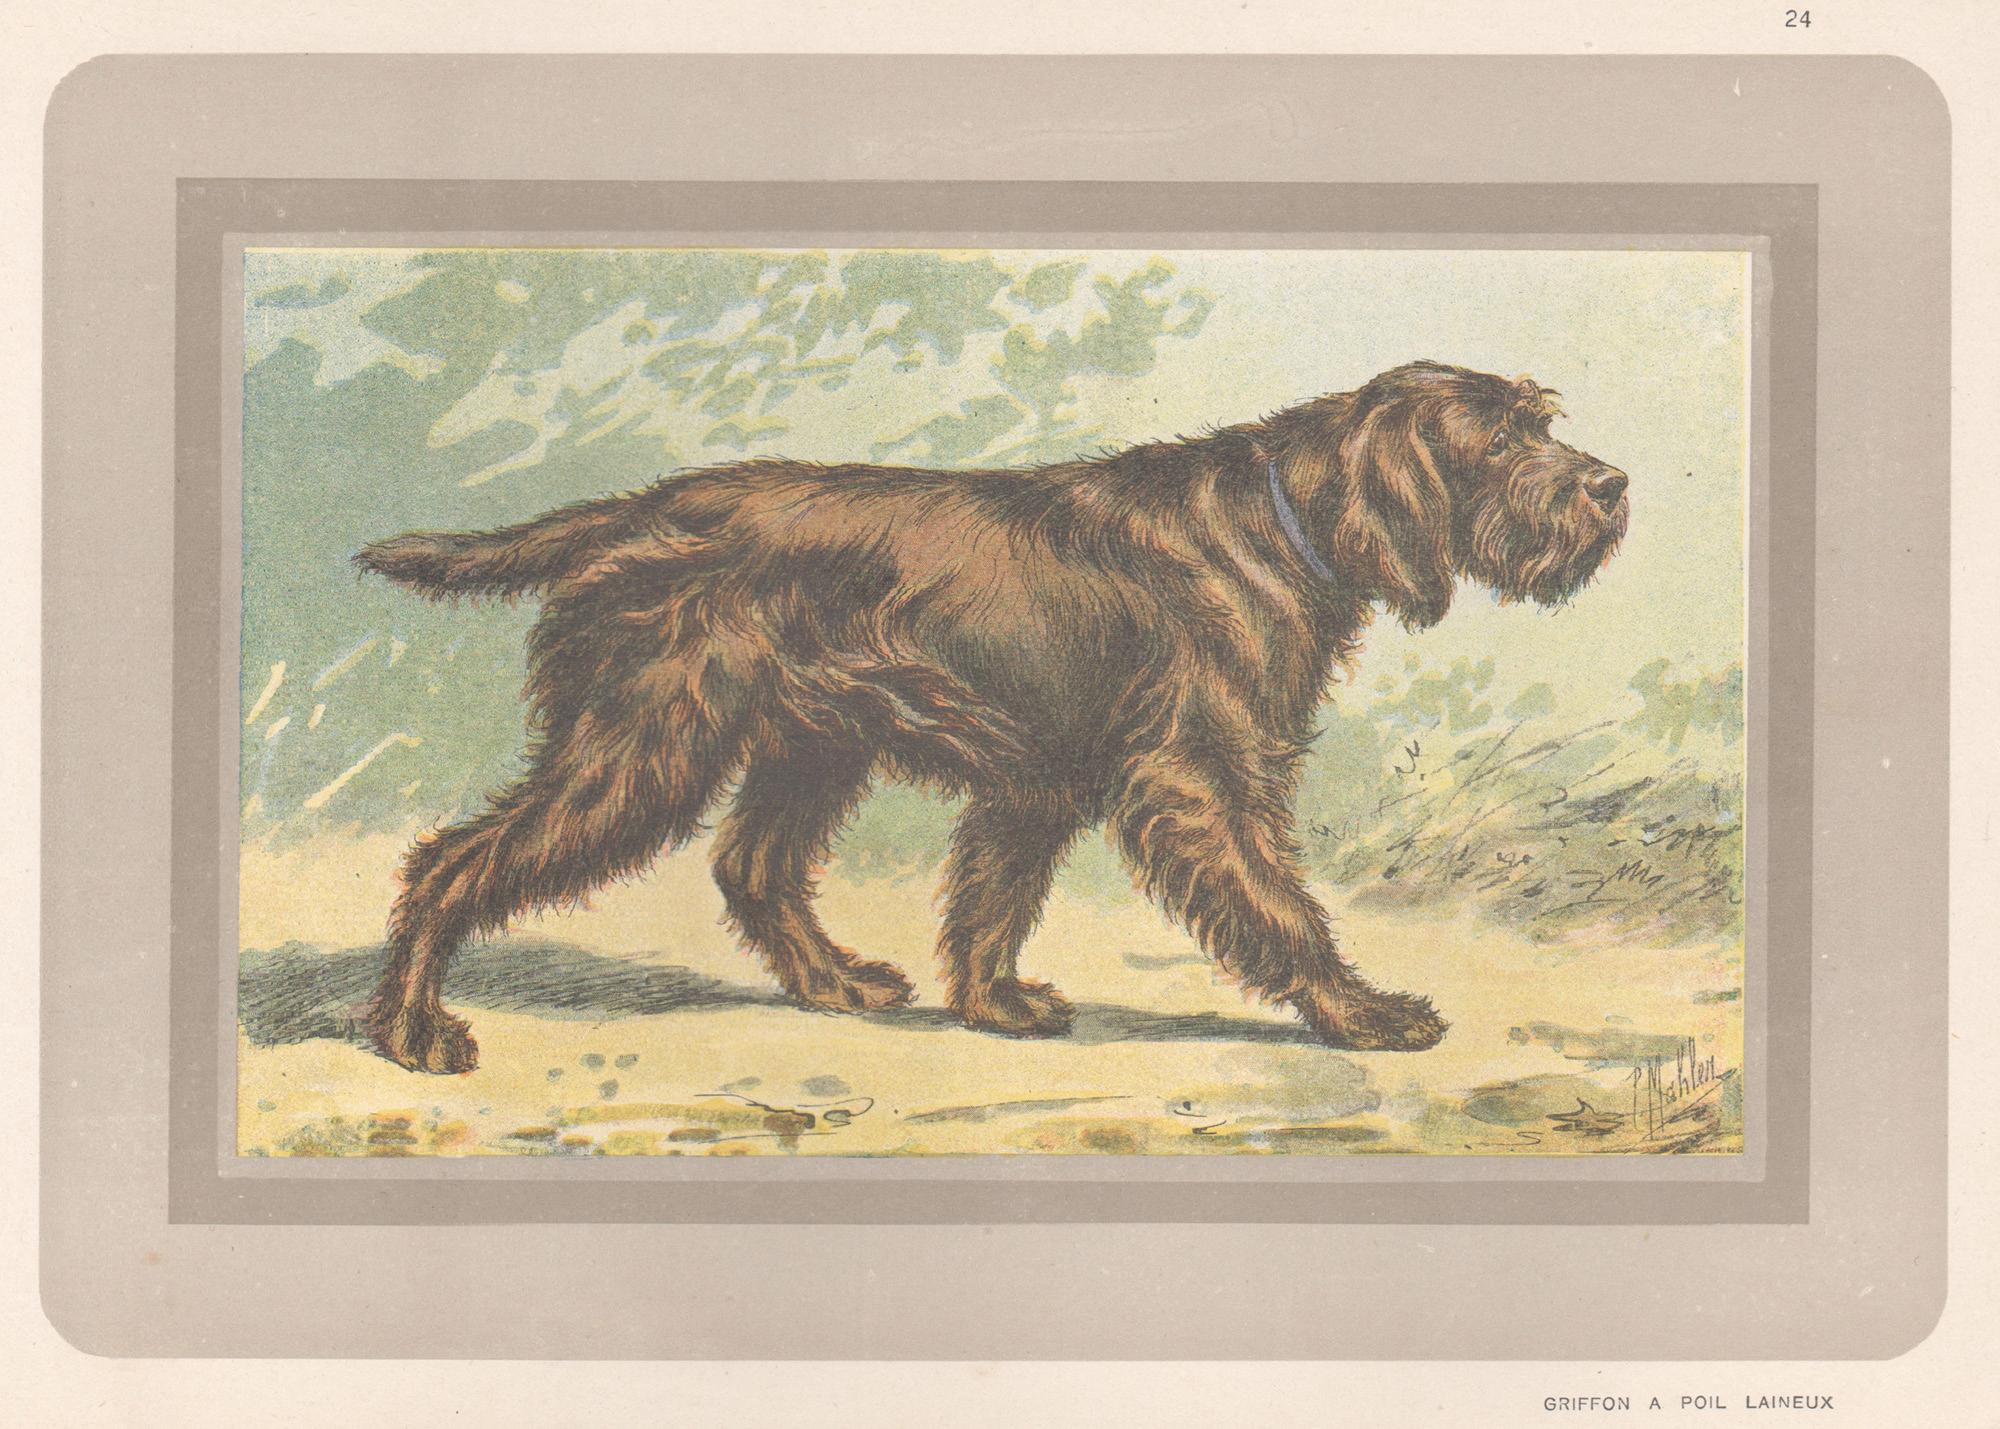 P. Mahler Animal Print - Griffon A Poil Laineux, French hound dog chromolithograph print, 1931